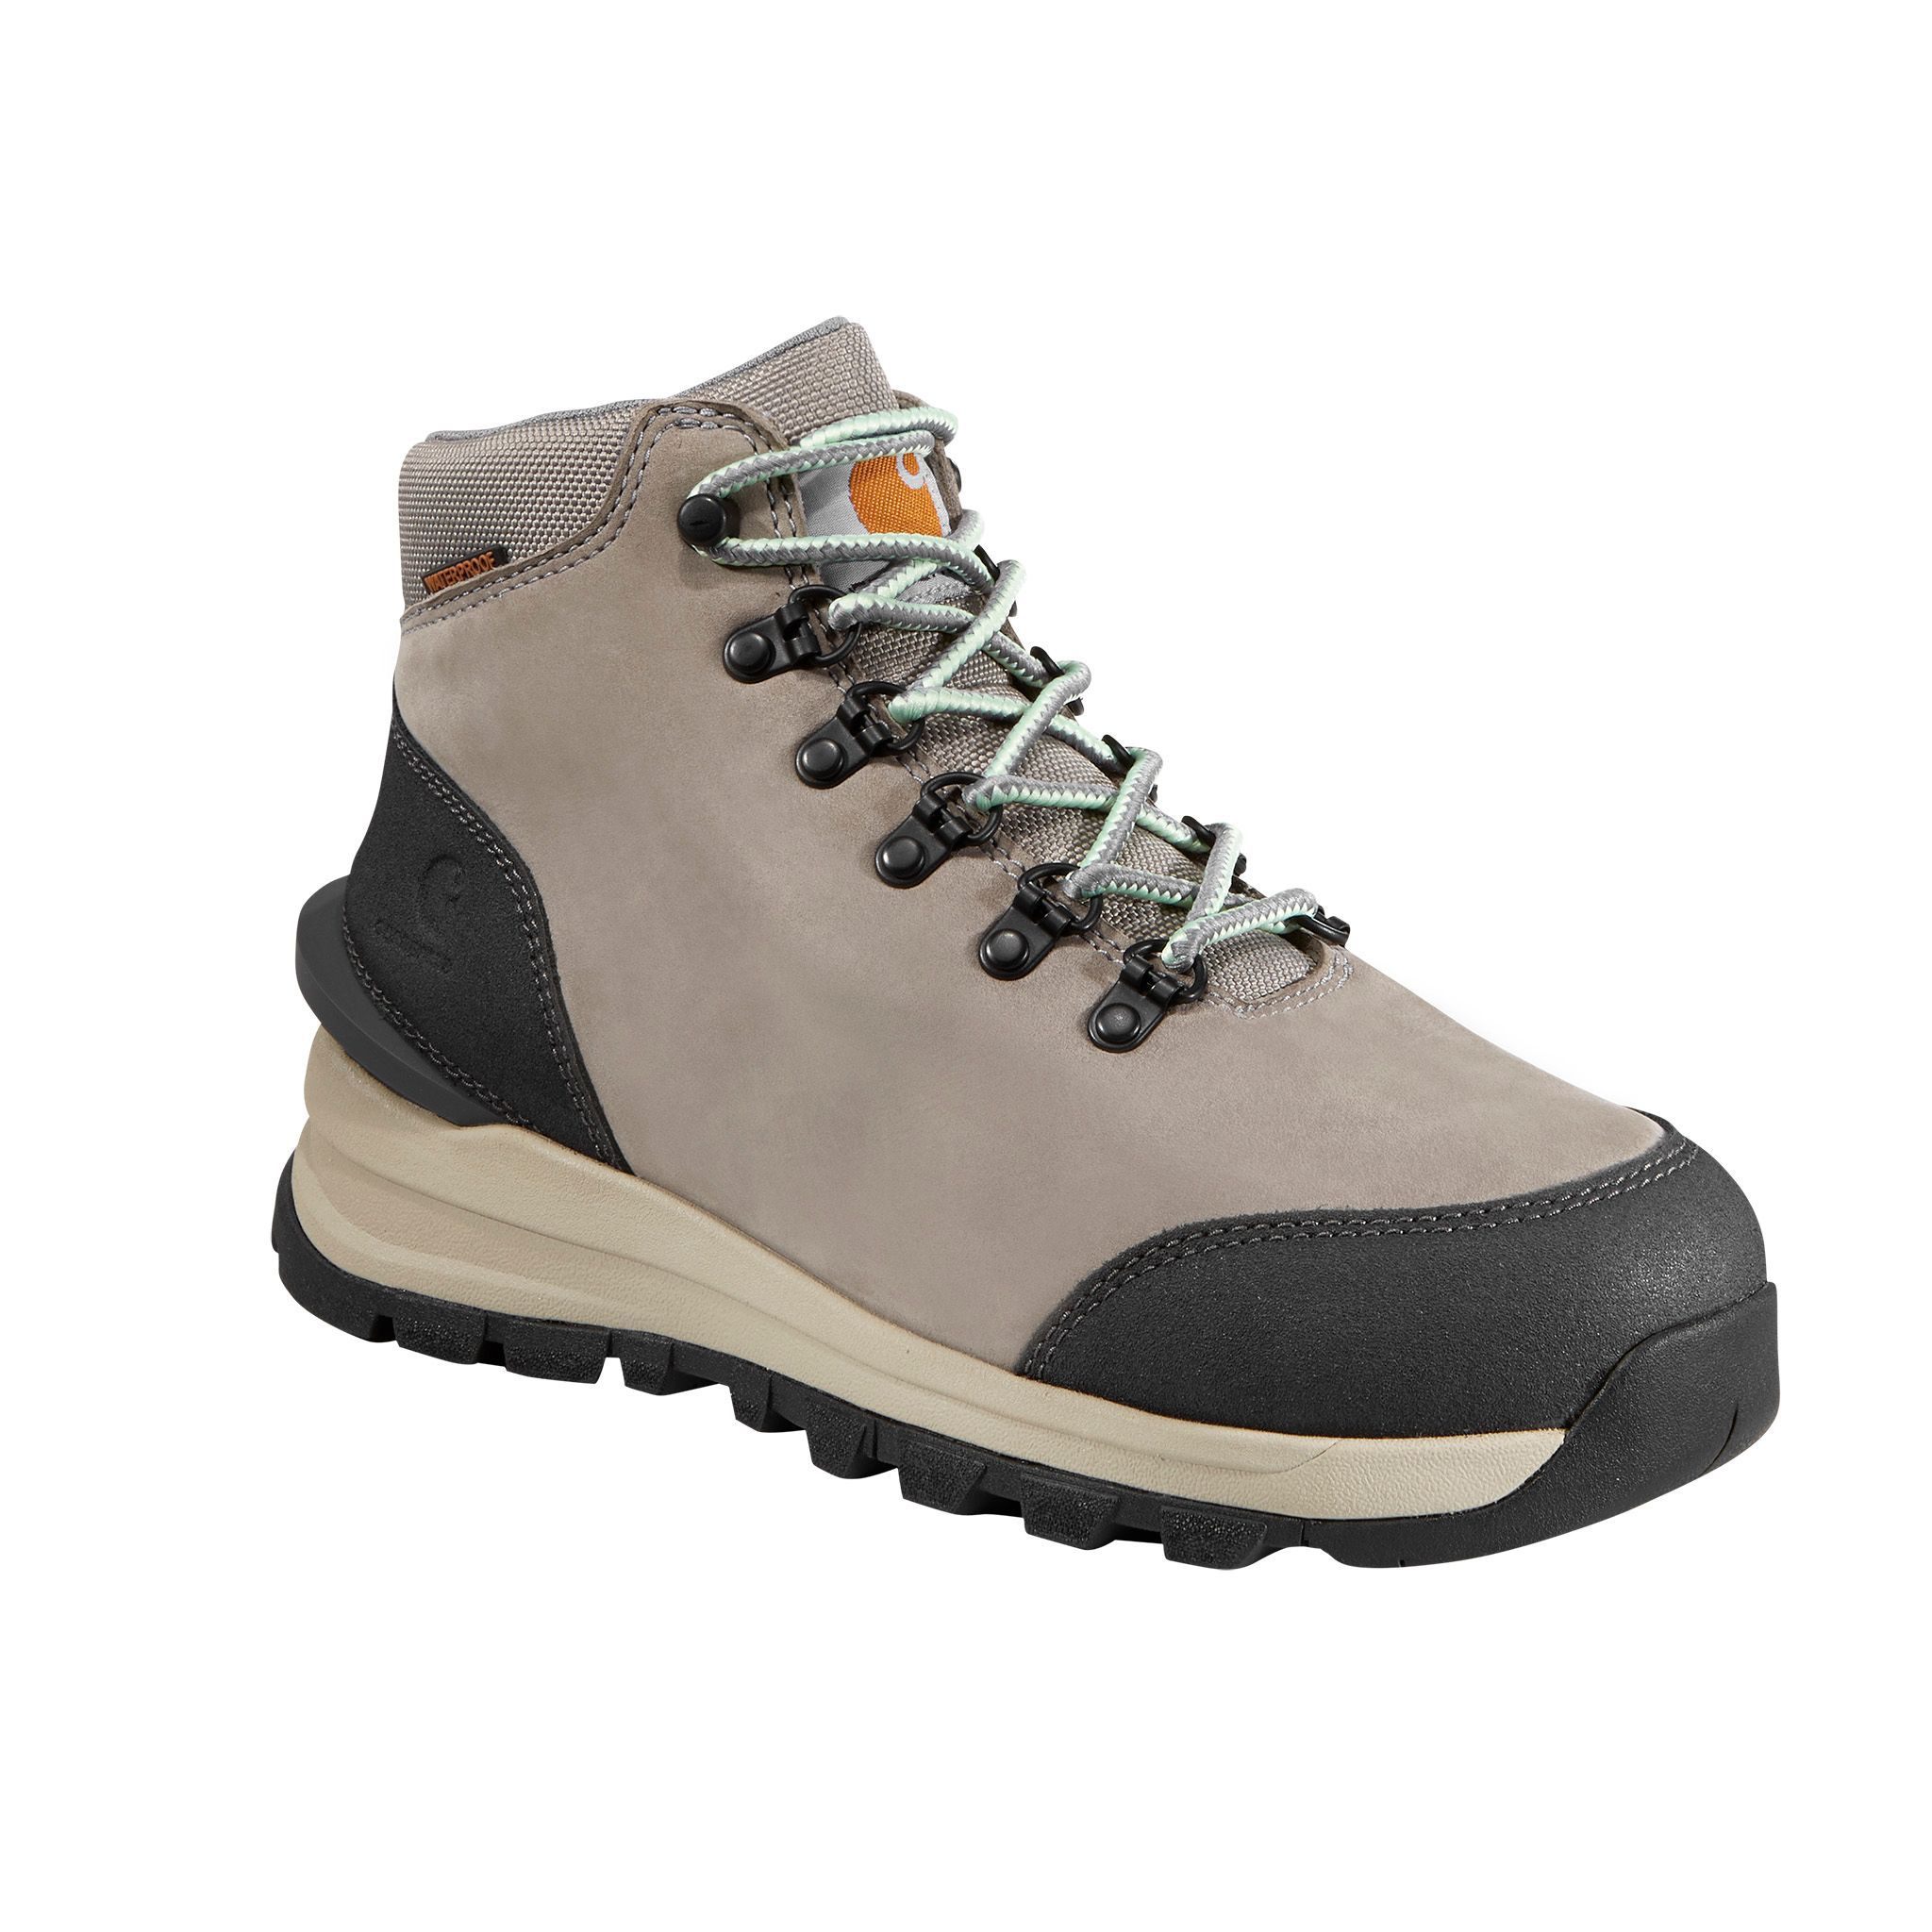 Carhartt Gilmore Waterproof Hiking Boots for Ladies - Grey Nubuck - 8M